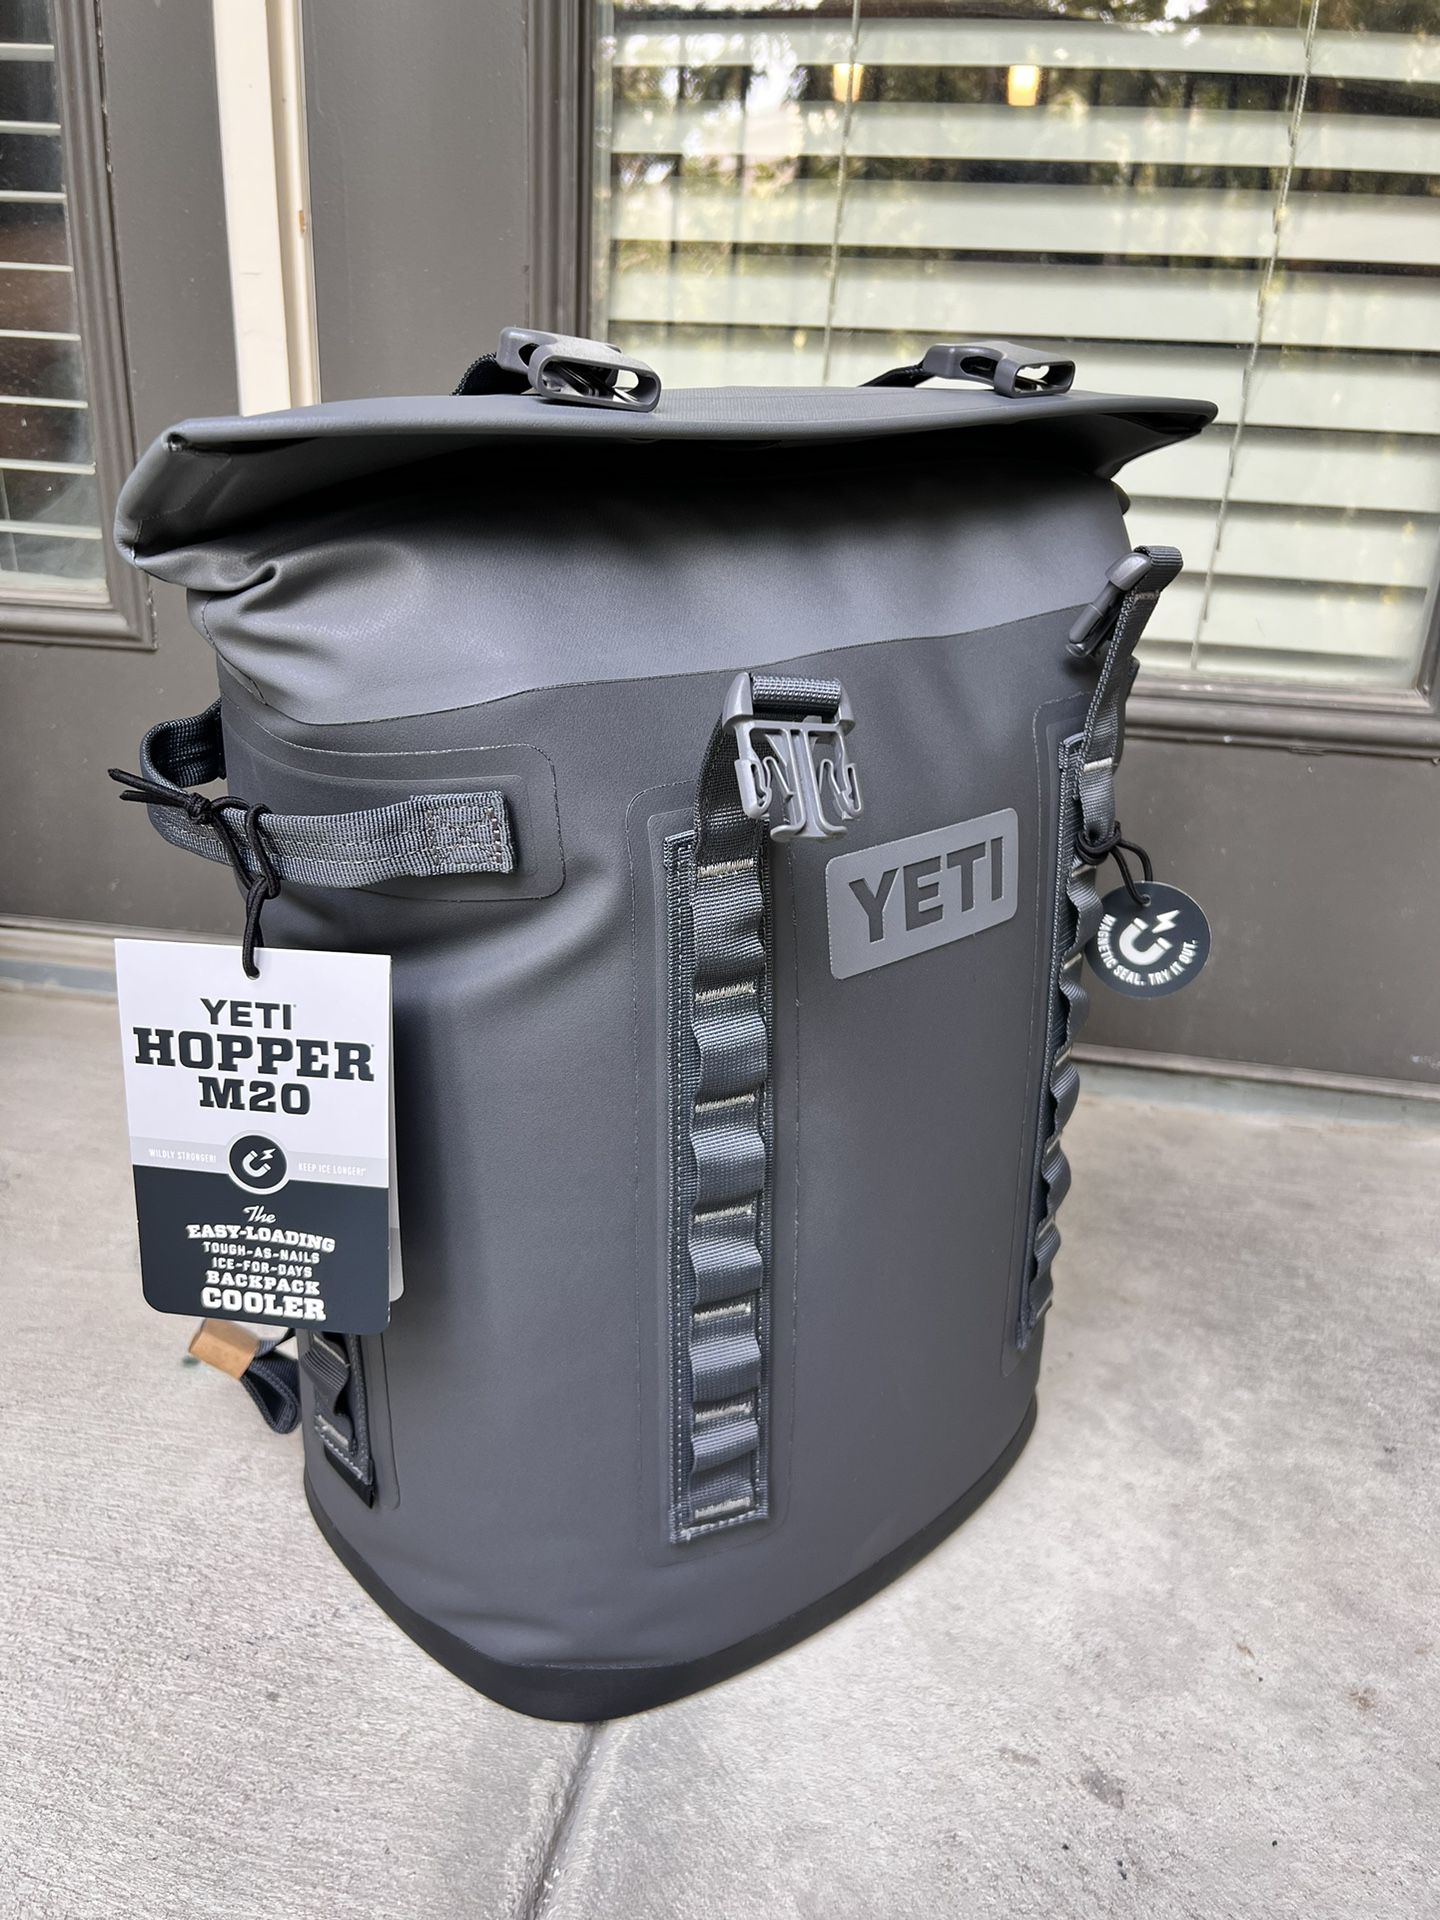 Yeti Hopper BackFlip 24 Soft Sided Backpack Cooler - Charcoal